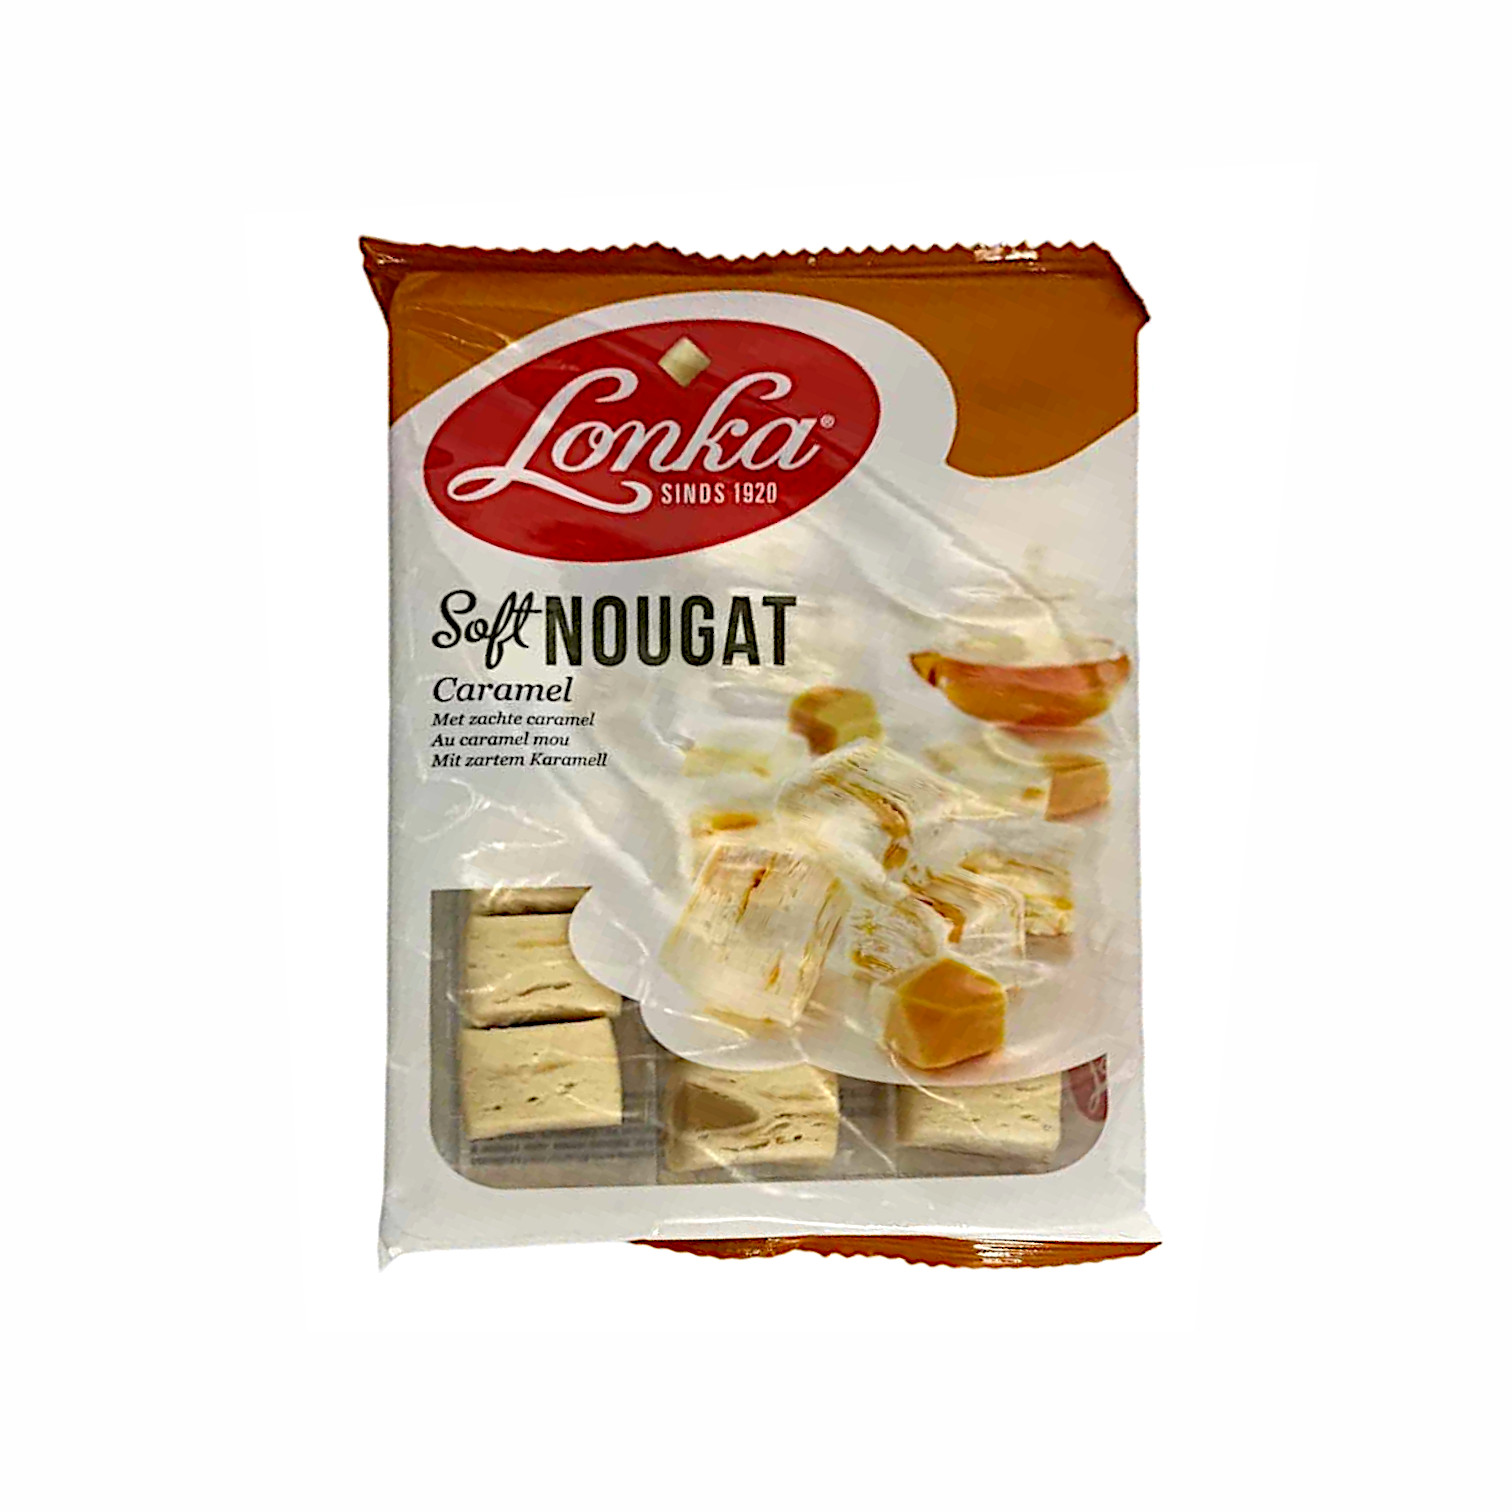 Lonka Soft Nougat Caramel 170g